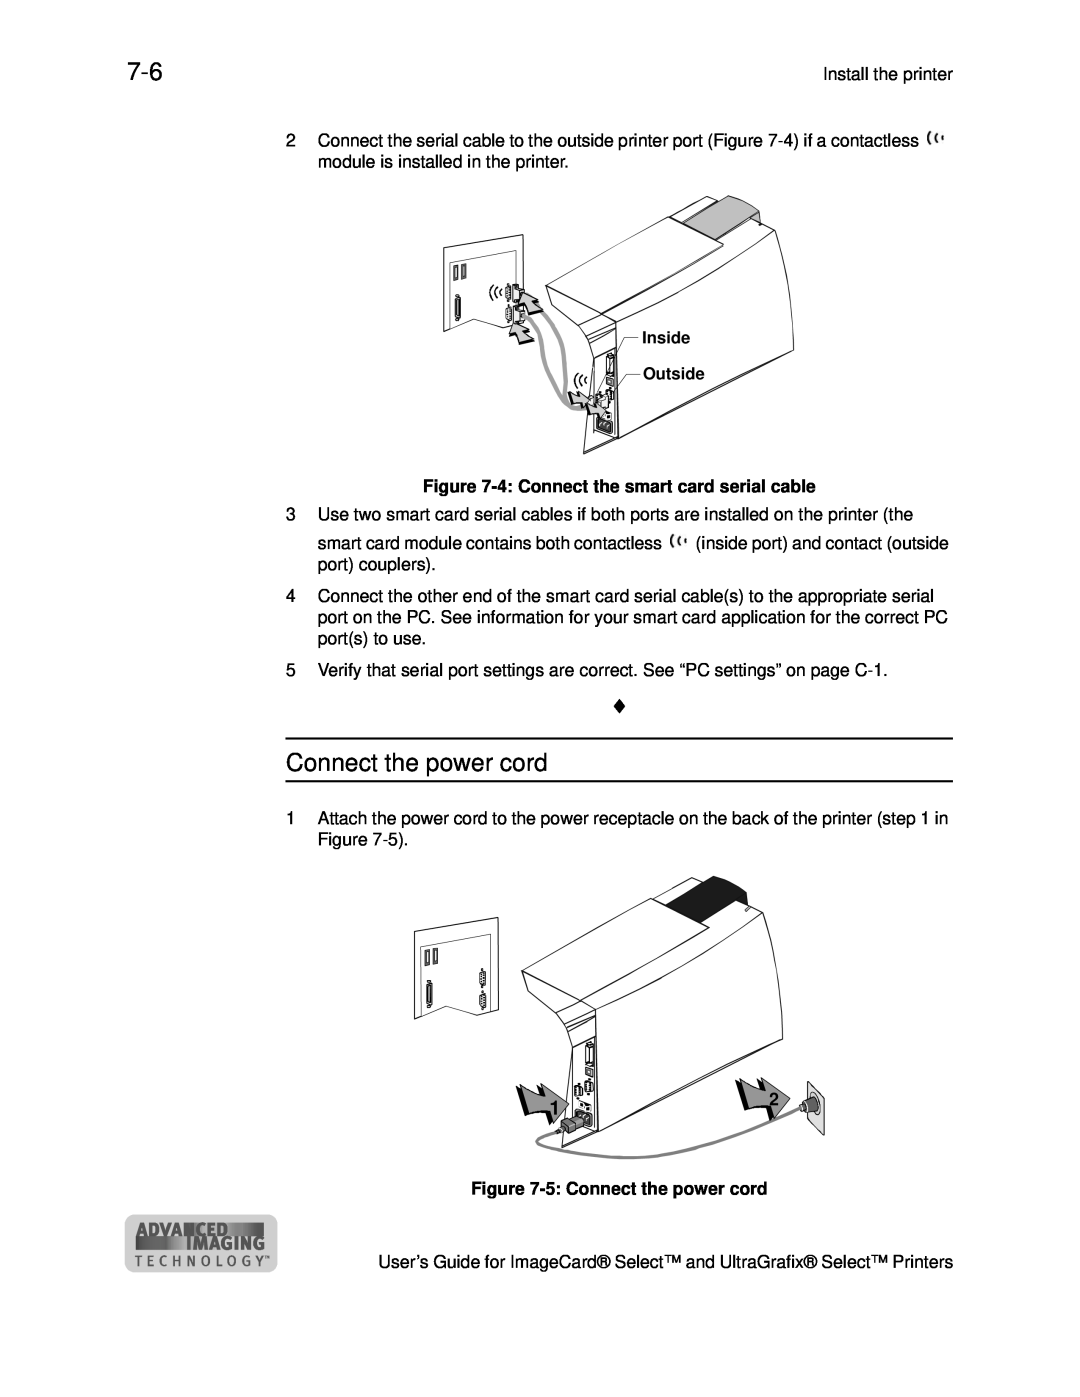 Datacard Group ImageCard SelectTM and UltraGrafix SelectTM Printers manual 5 Connect the power cord 